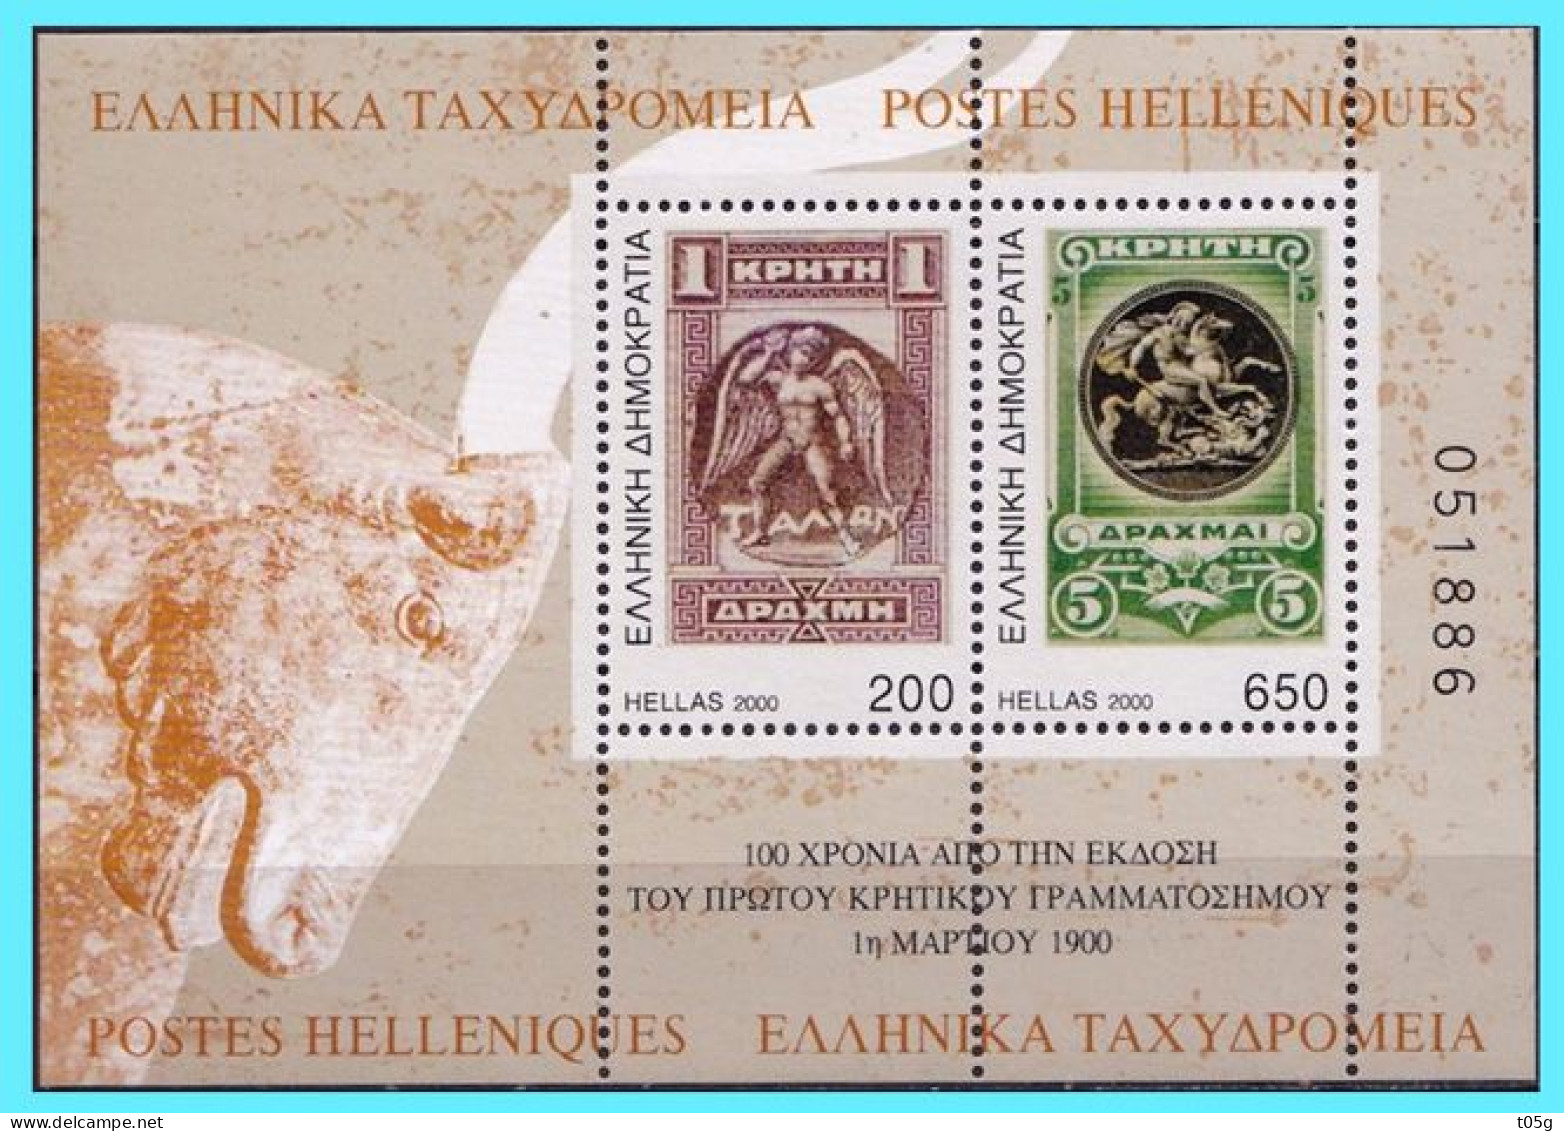 GREECE- GRECE- HELLAS 2000:  The Stamps Of Crete Miniature Sheet MNH** - Neufs